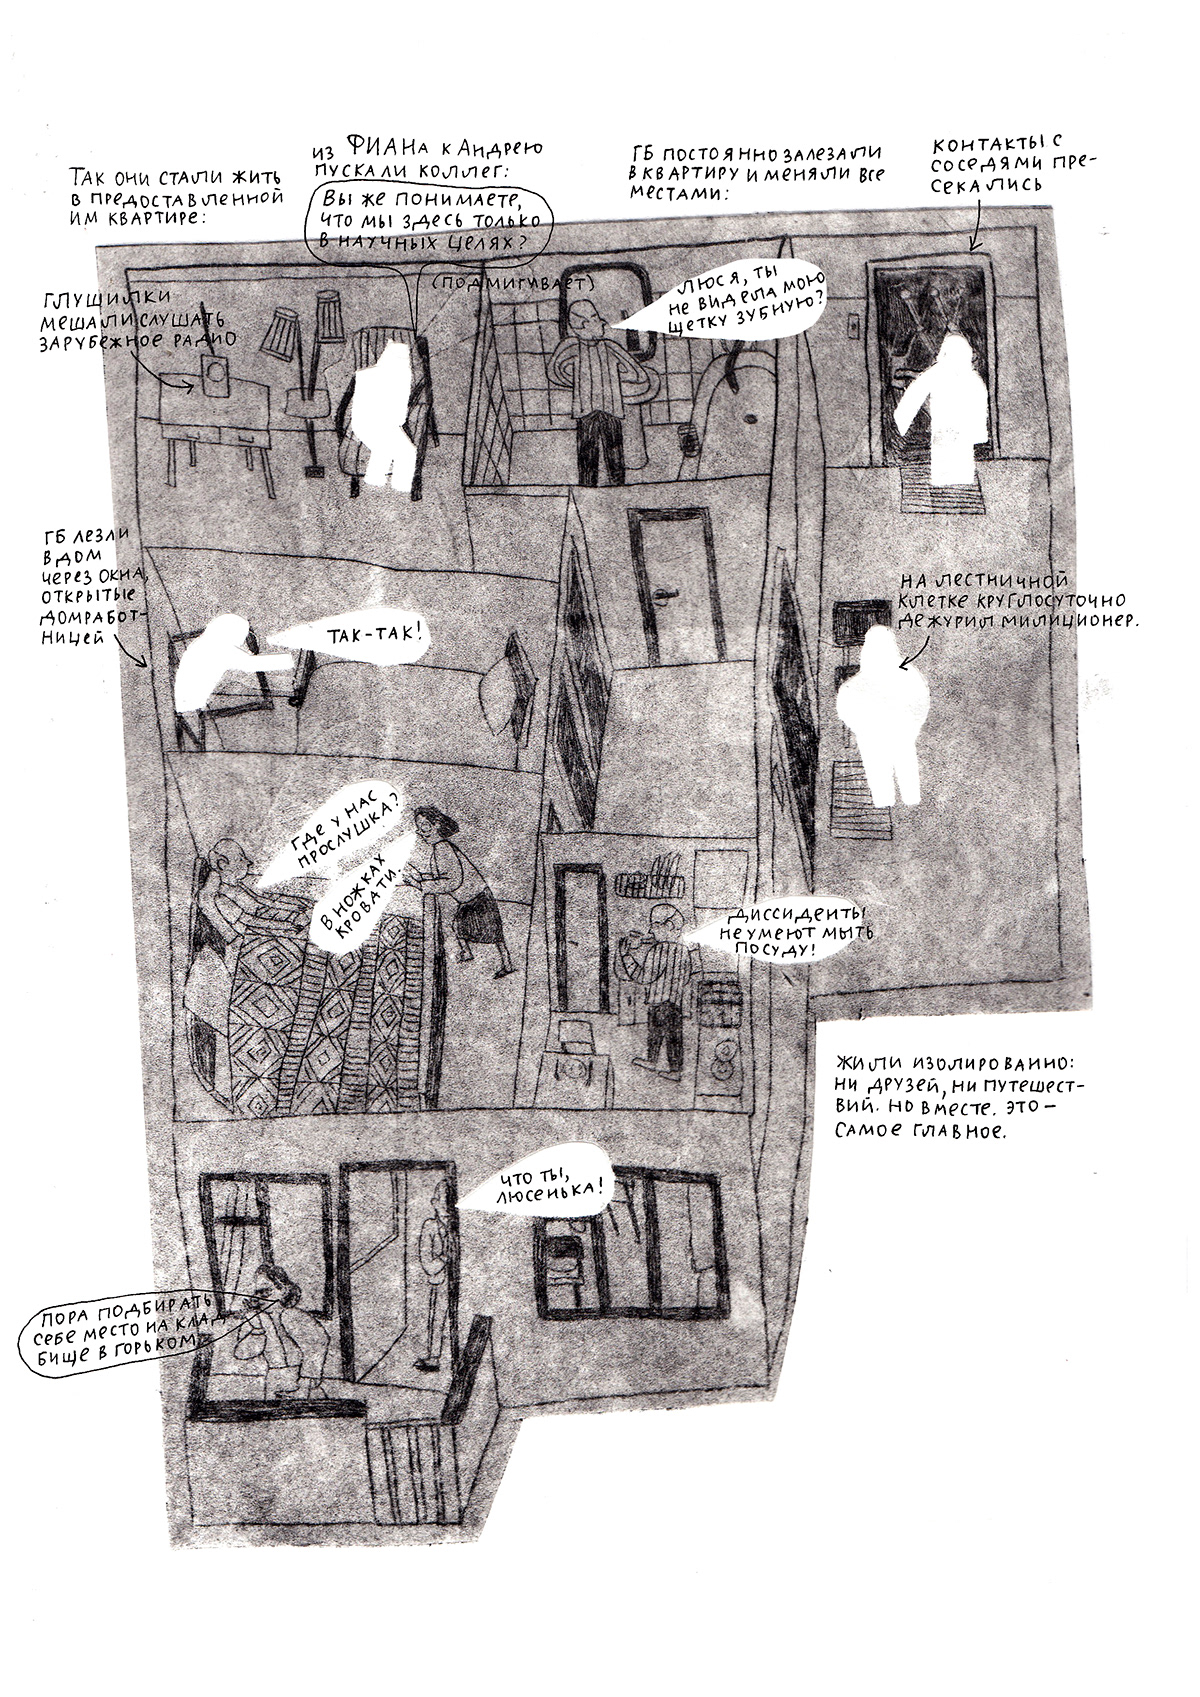 etching printmaking artwork Graphic Novel comics ussr Soviet oppenheimer nuclear DryPoint